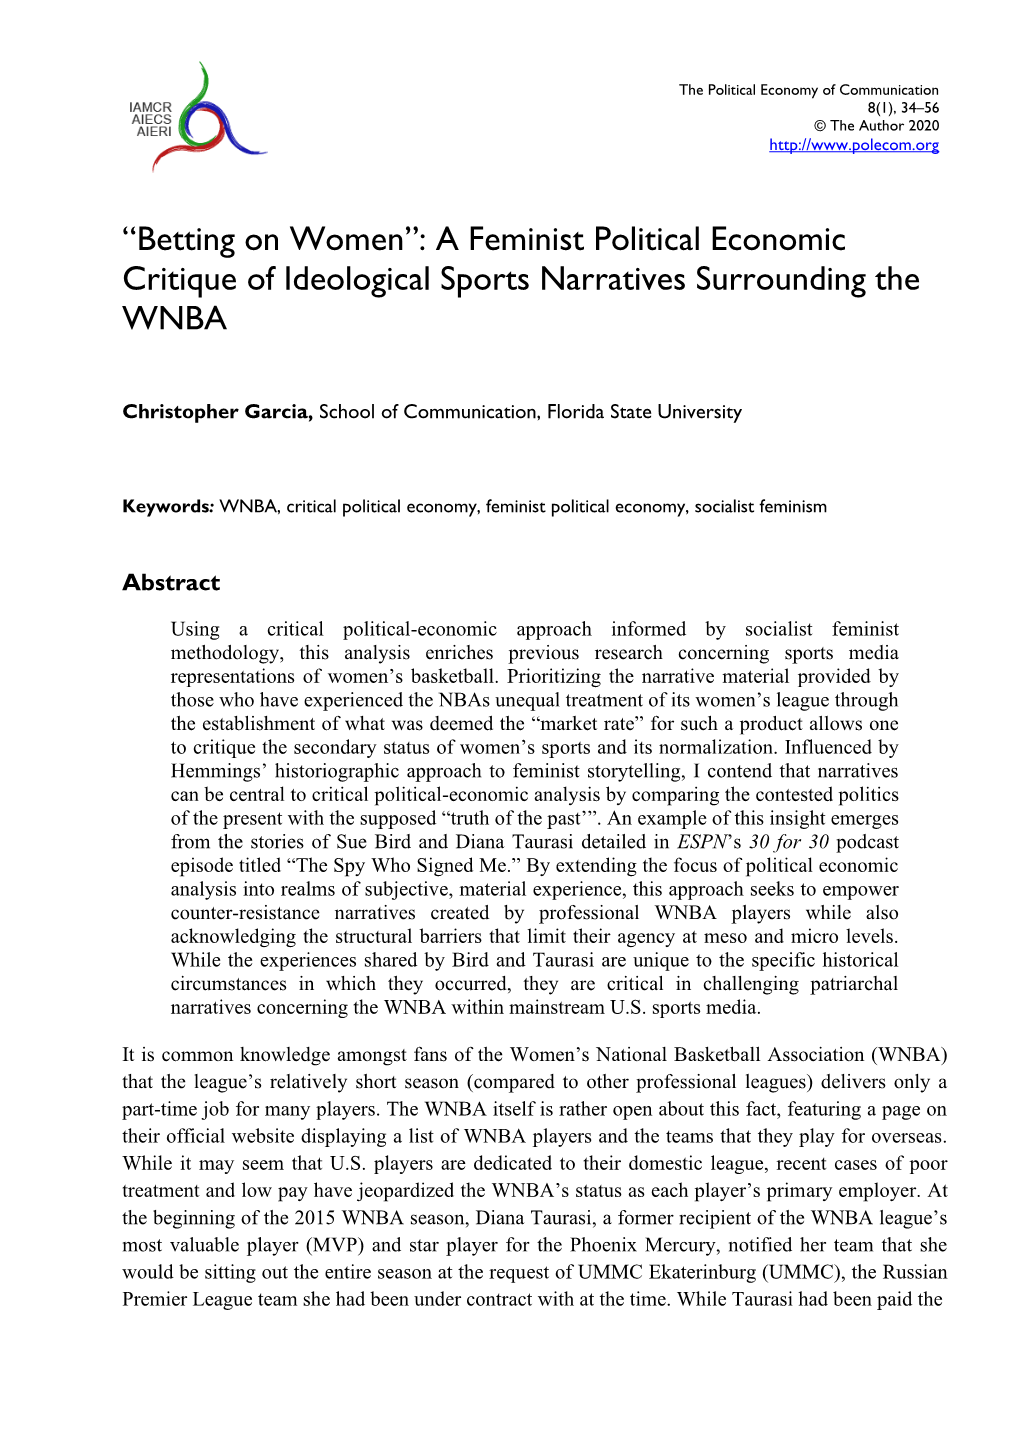 A Feminist Political Economic Critique of Ideological Sports Narratives Surrounding the WNBA